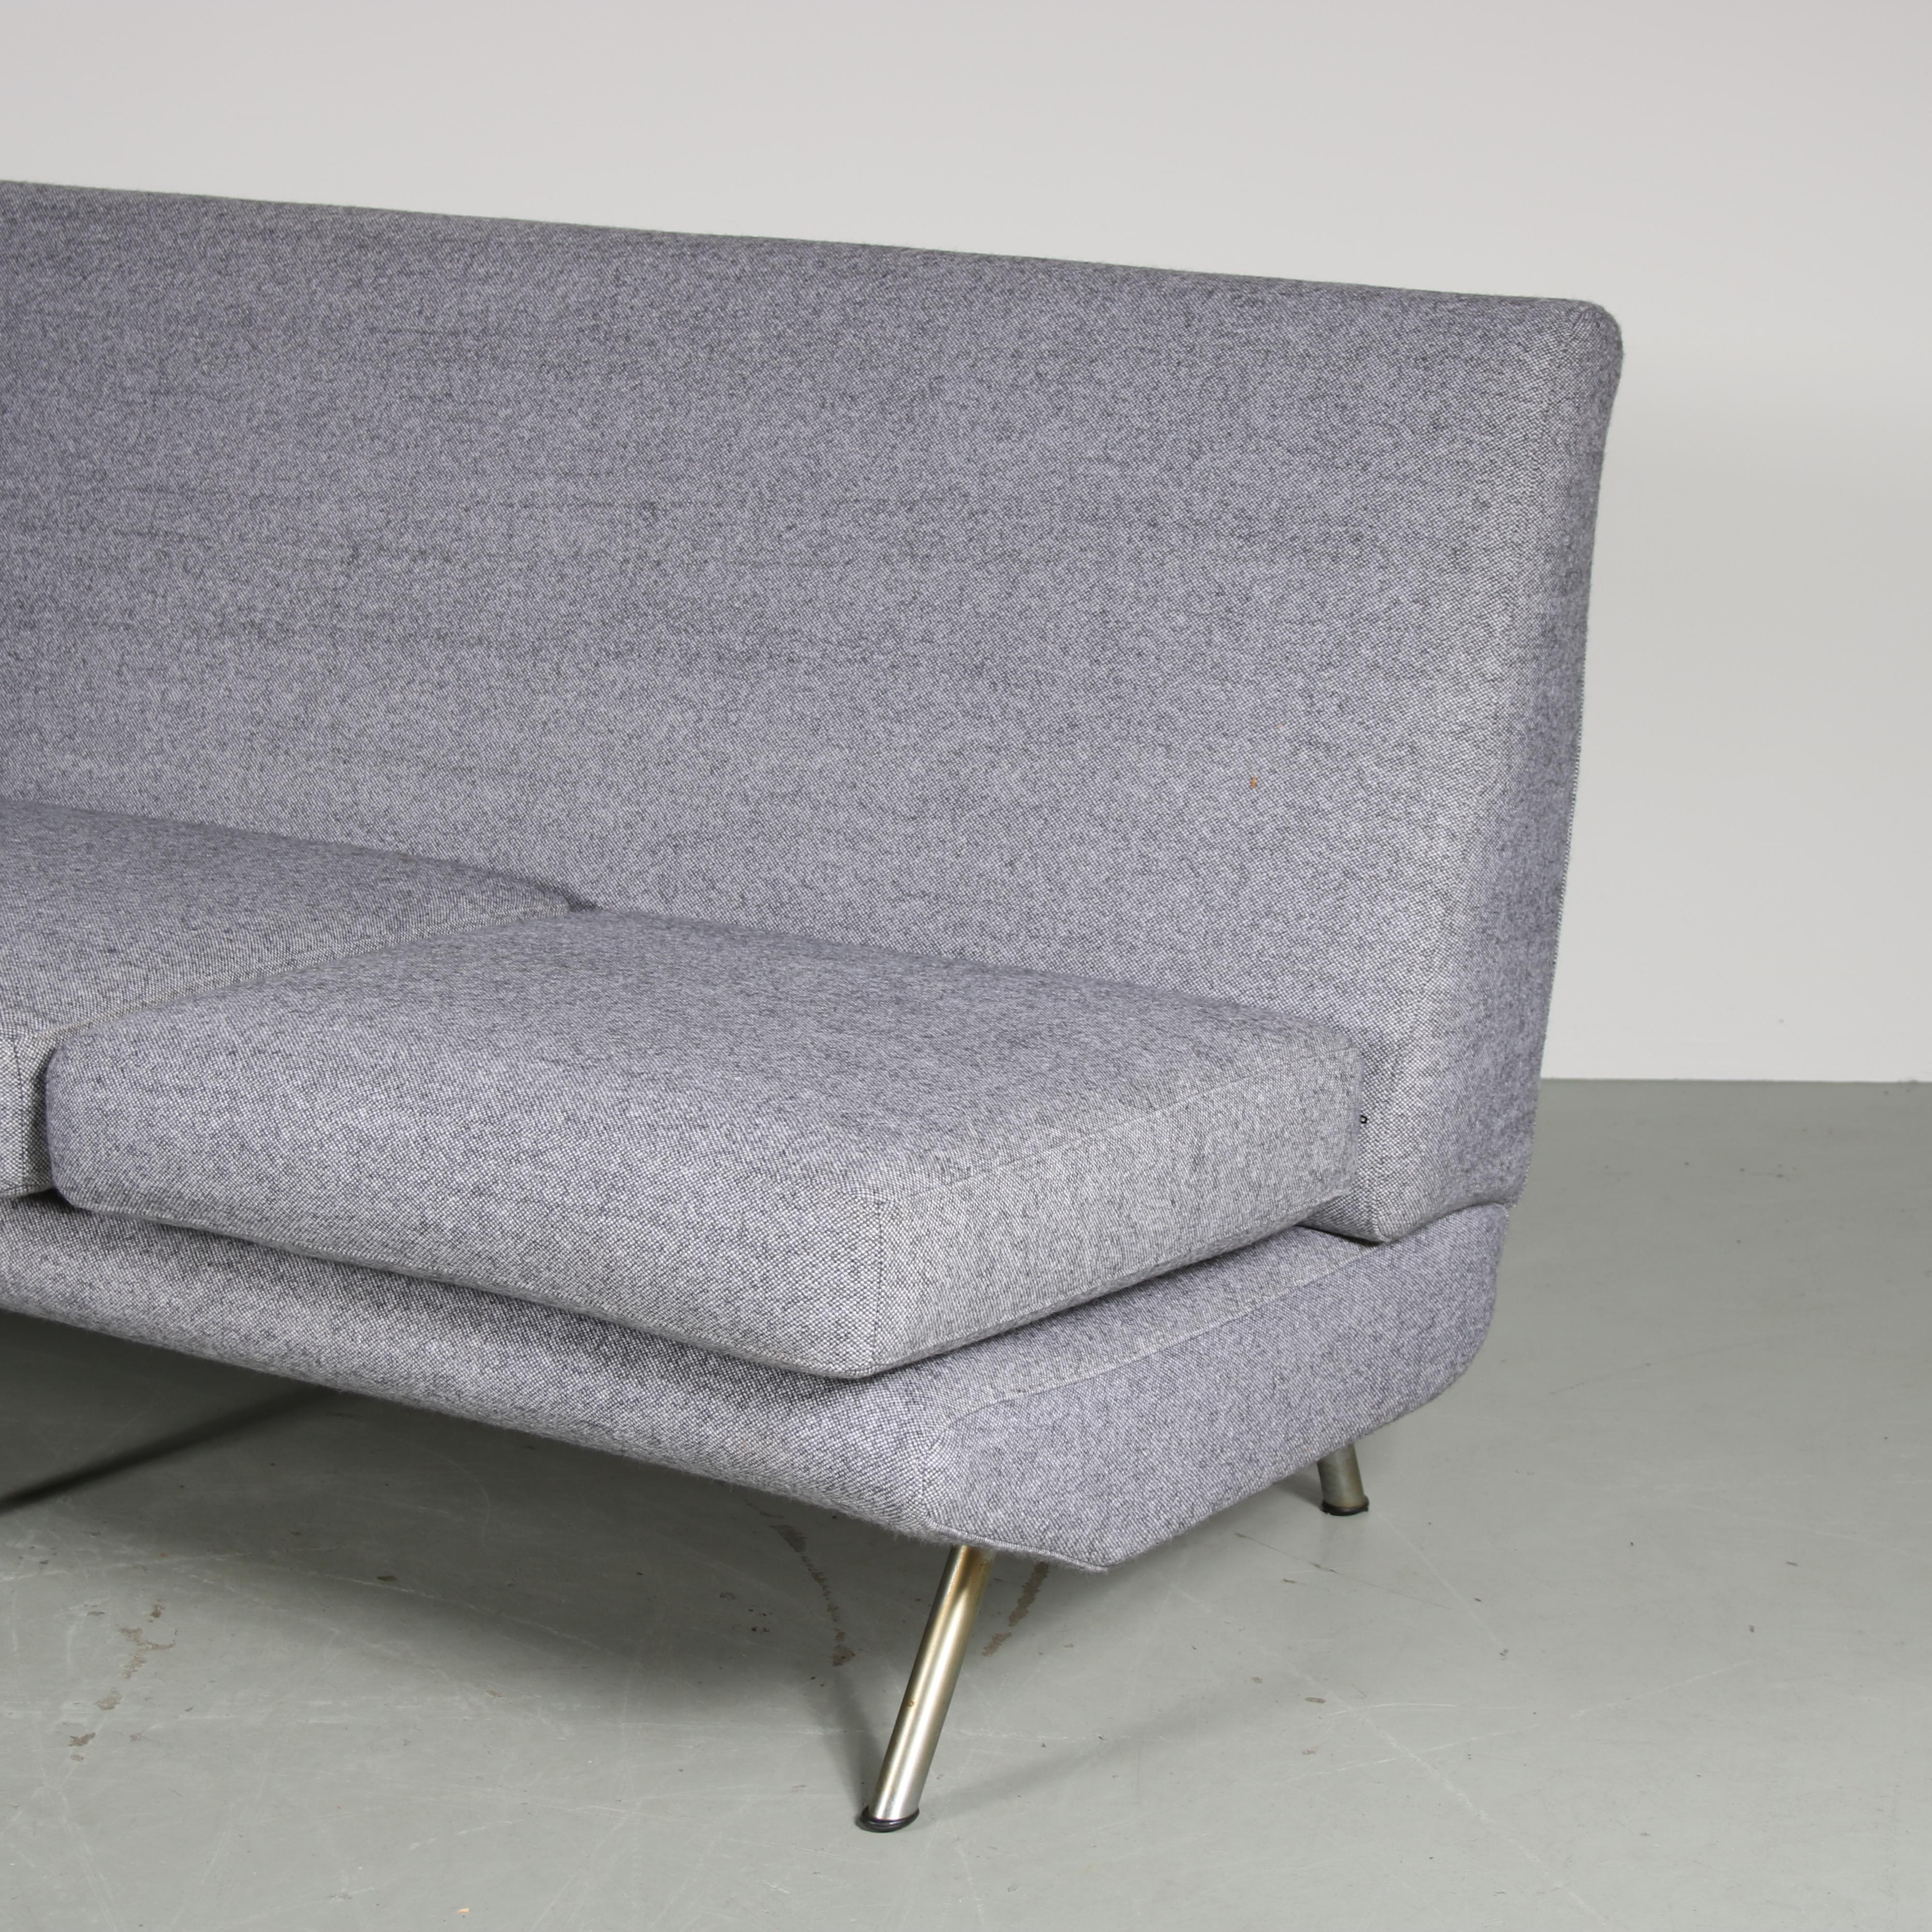 Marco Zanuso Sofa for Arflex, Italy, 1950 In Good Condition For Sale In Amsterdam, NL